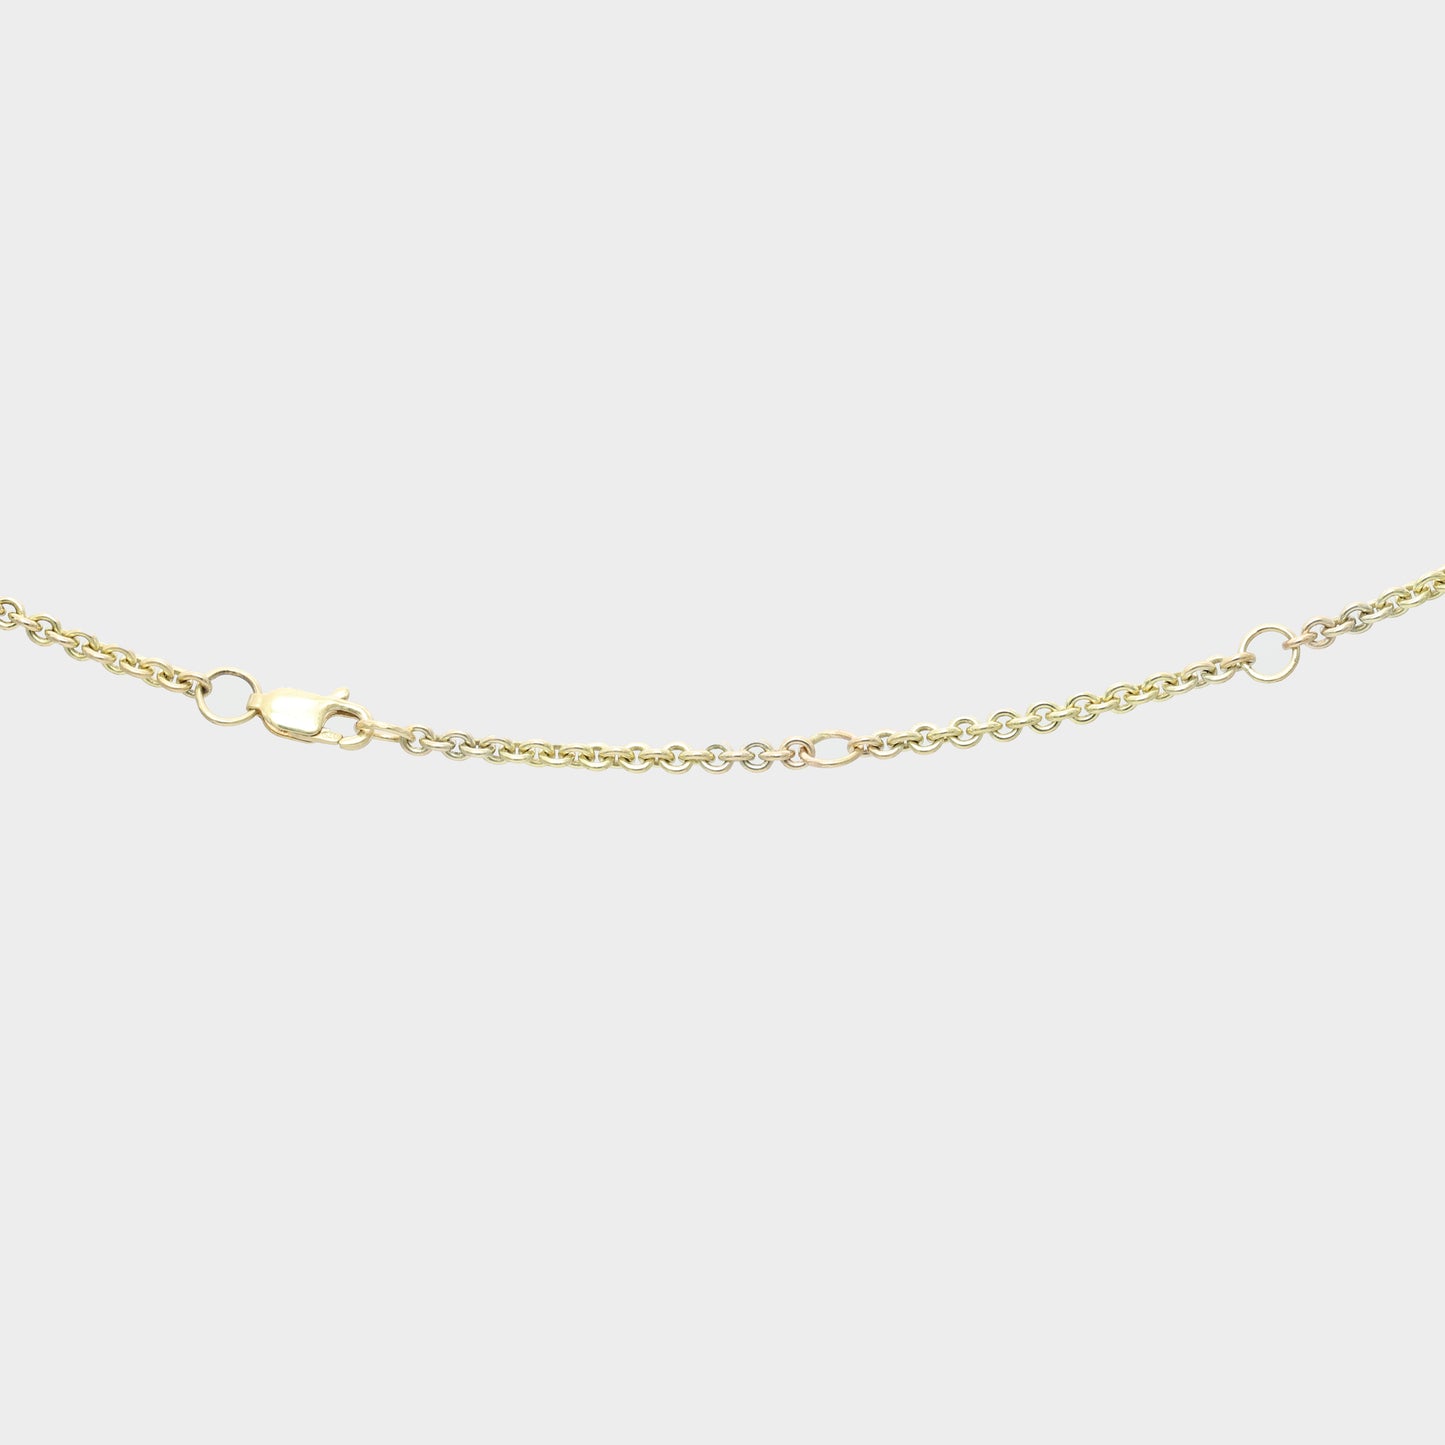 Gold Chain with Malachite Foliage